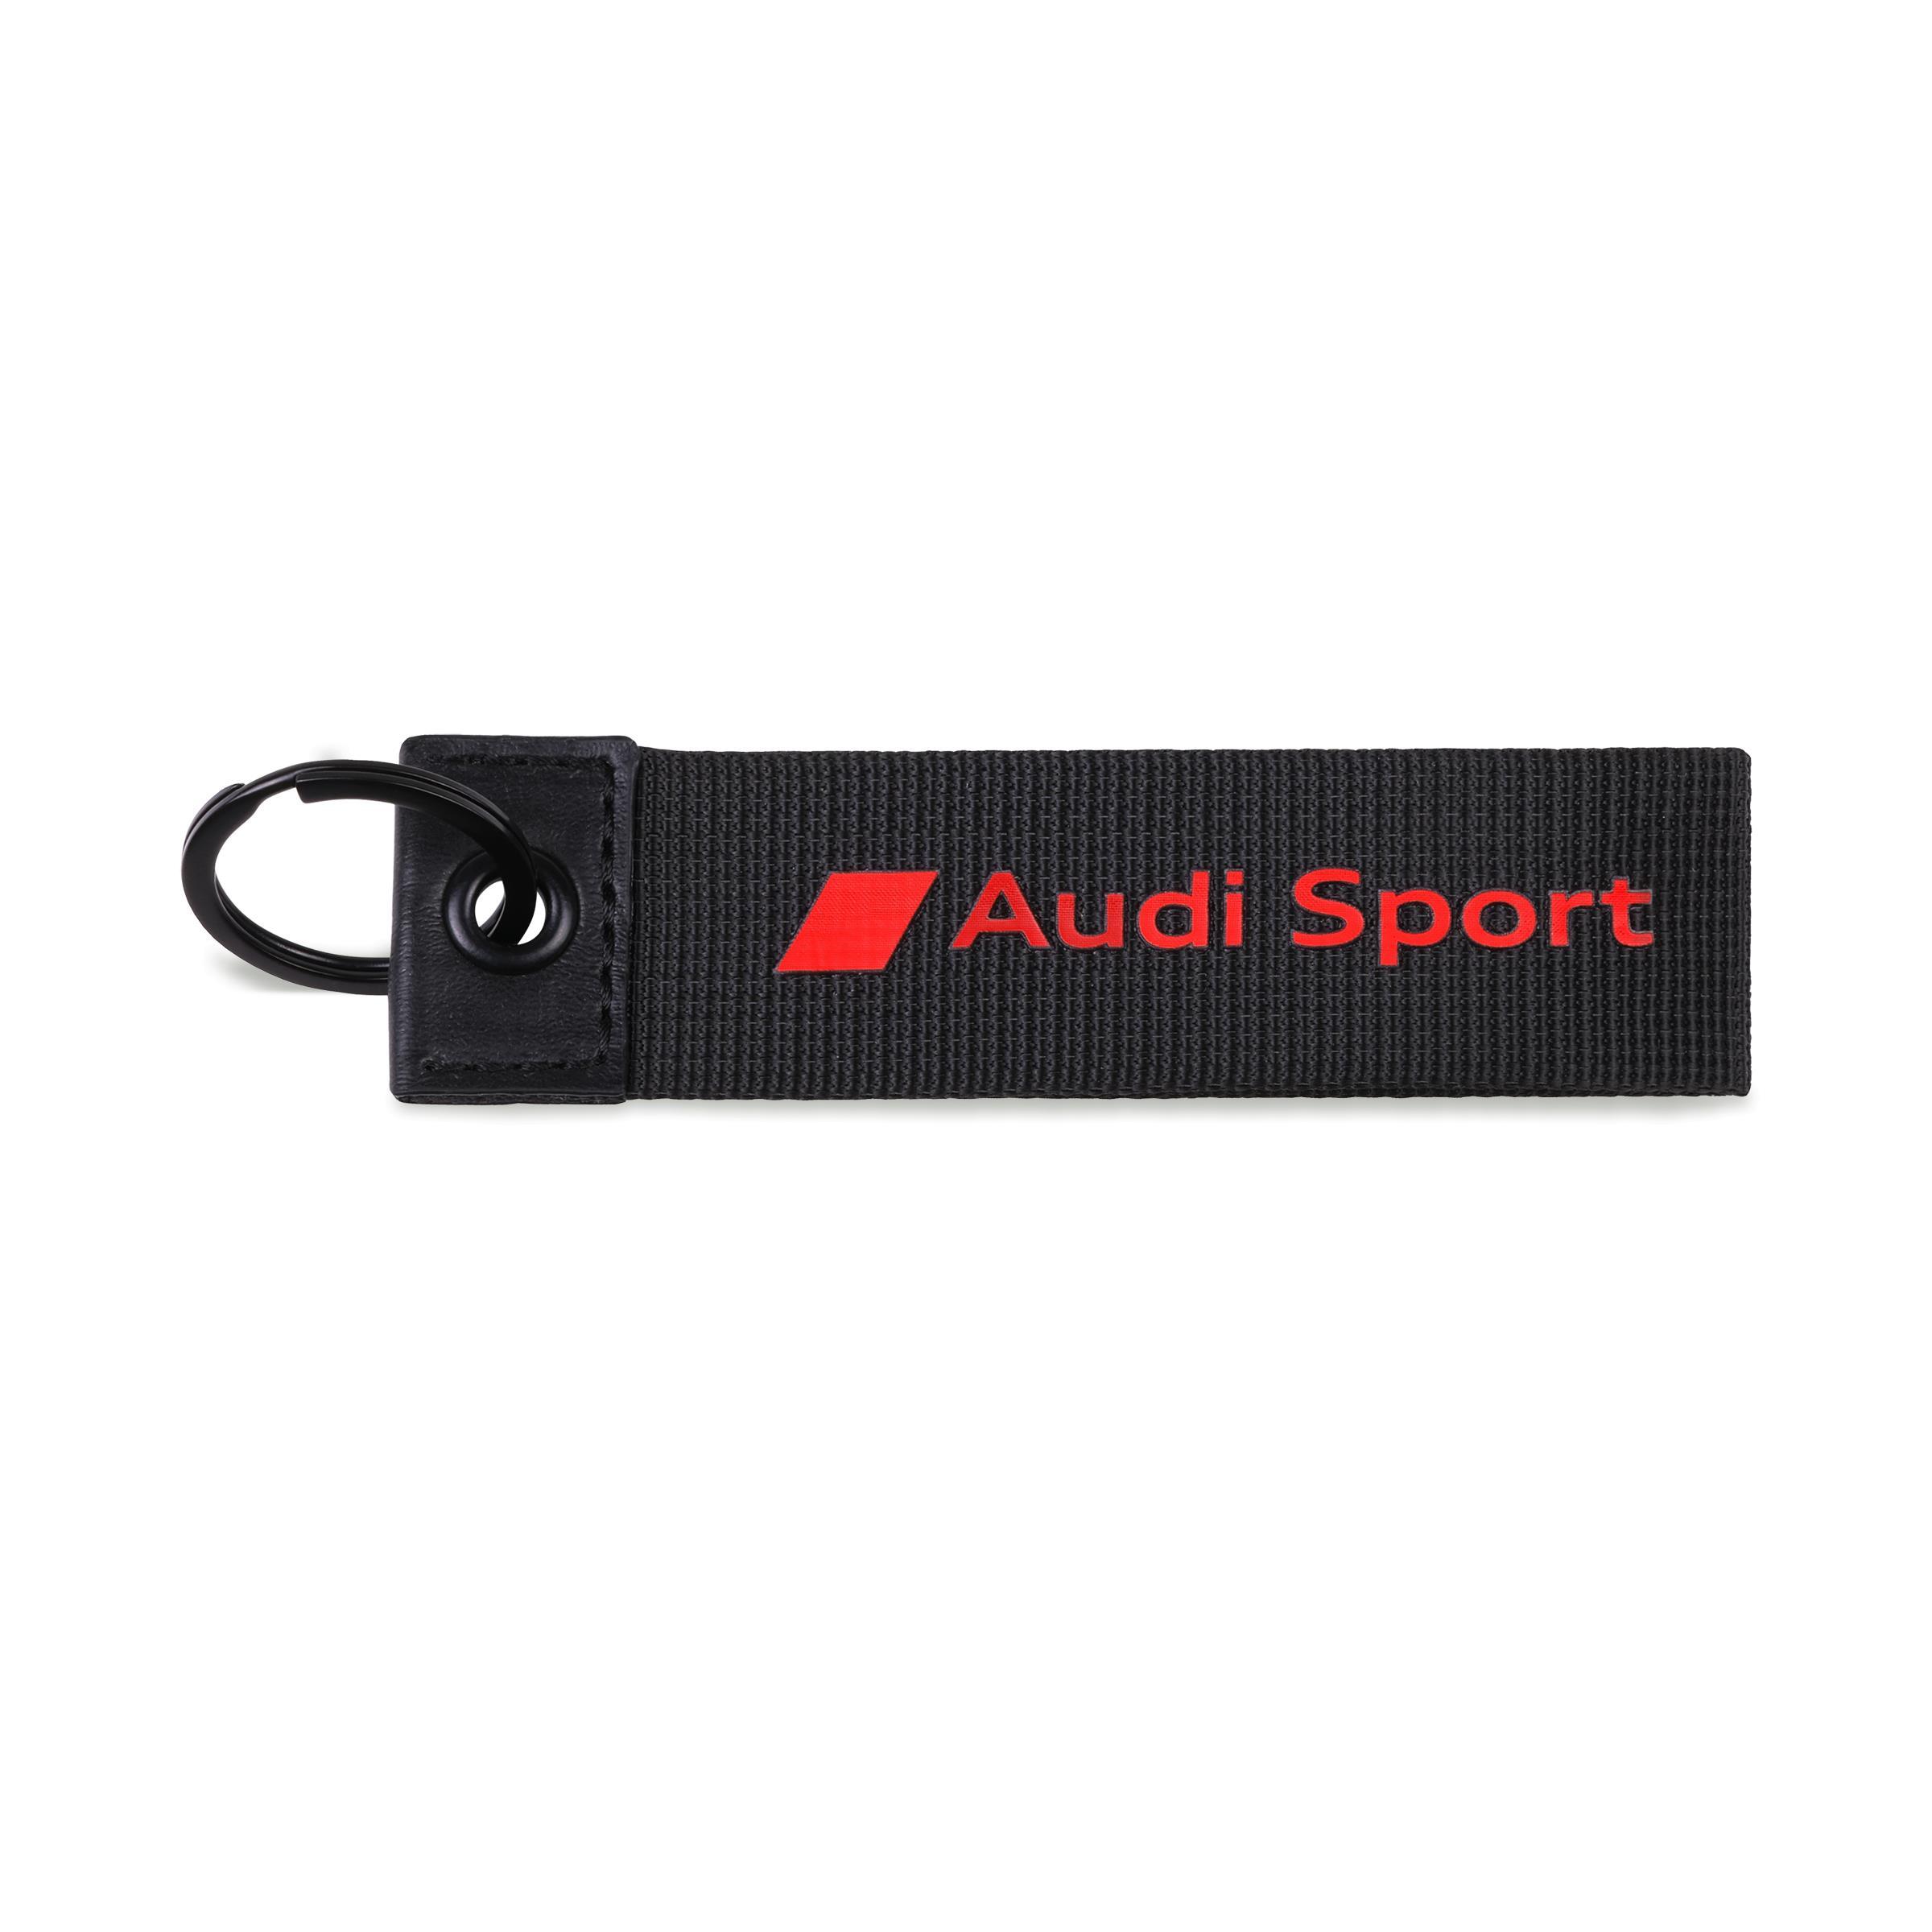 Portachiavi logo Audi sport originale accessori Audi